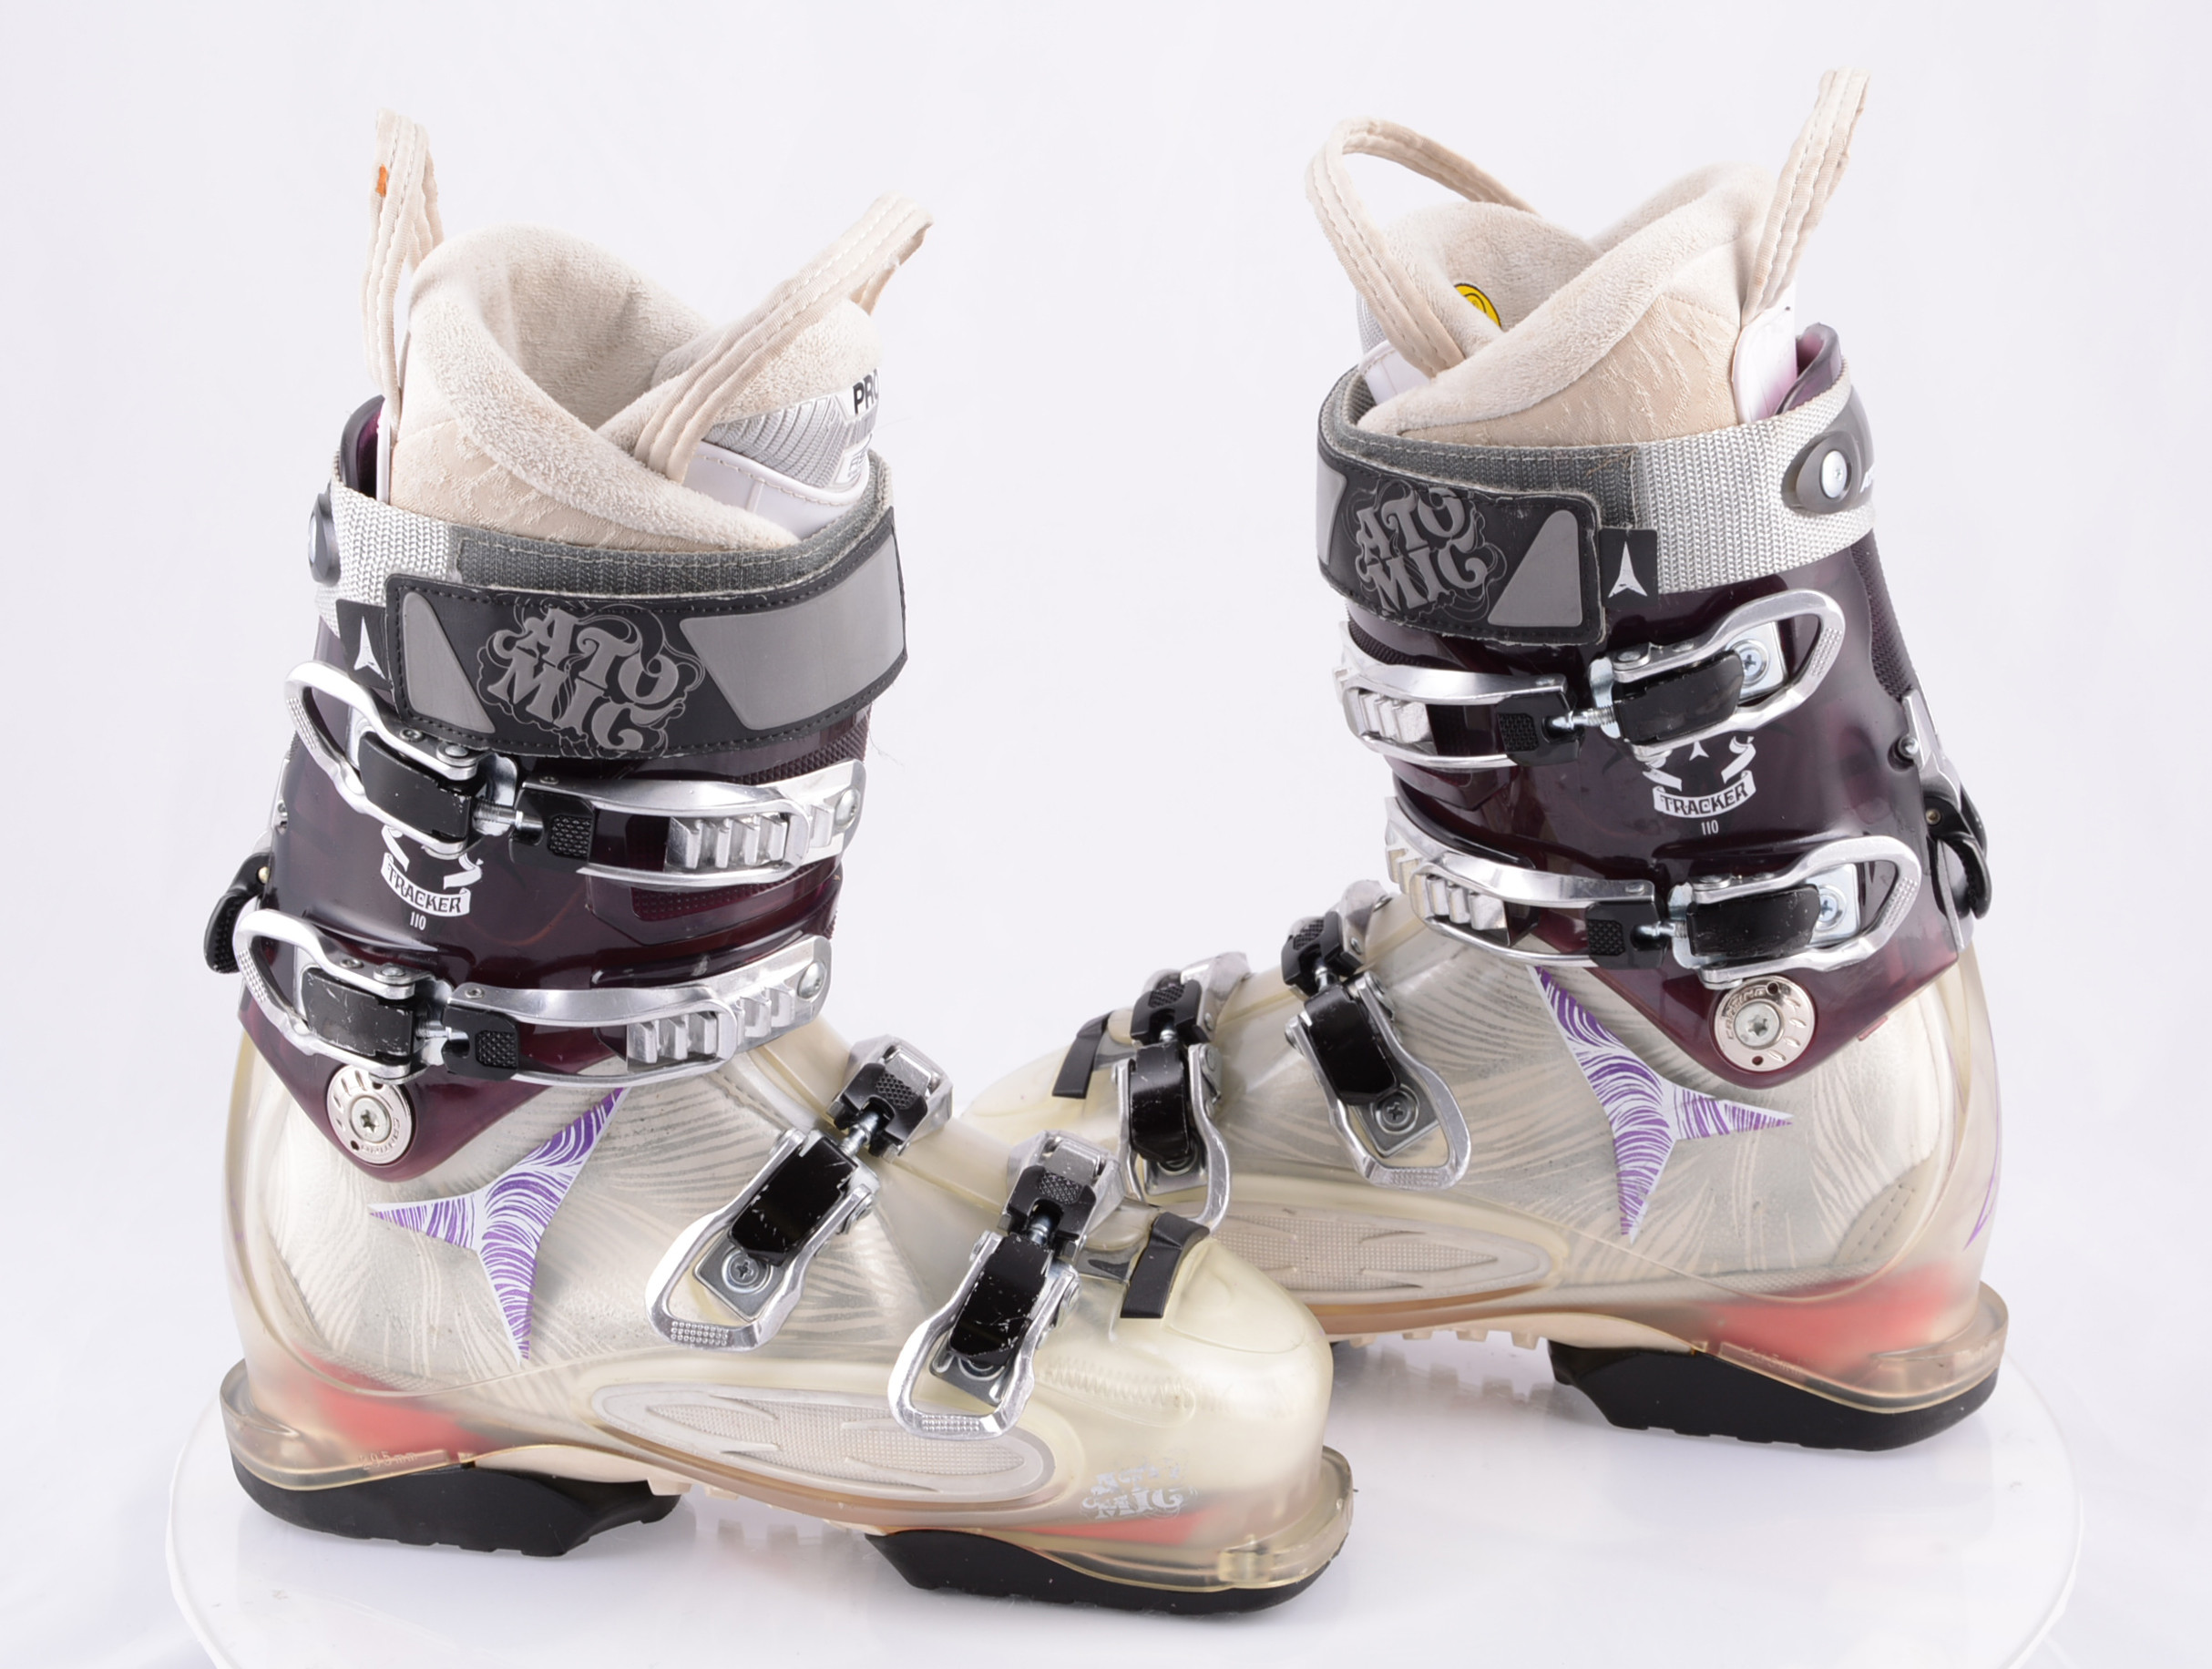 Atomic Tracker 110 Women's Ski Boots 